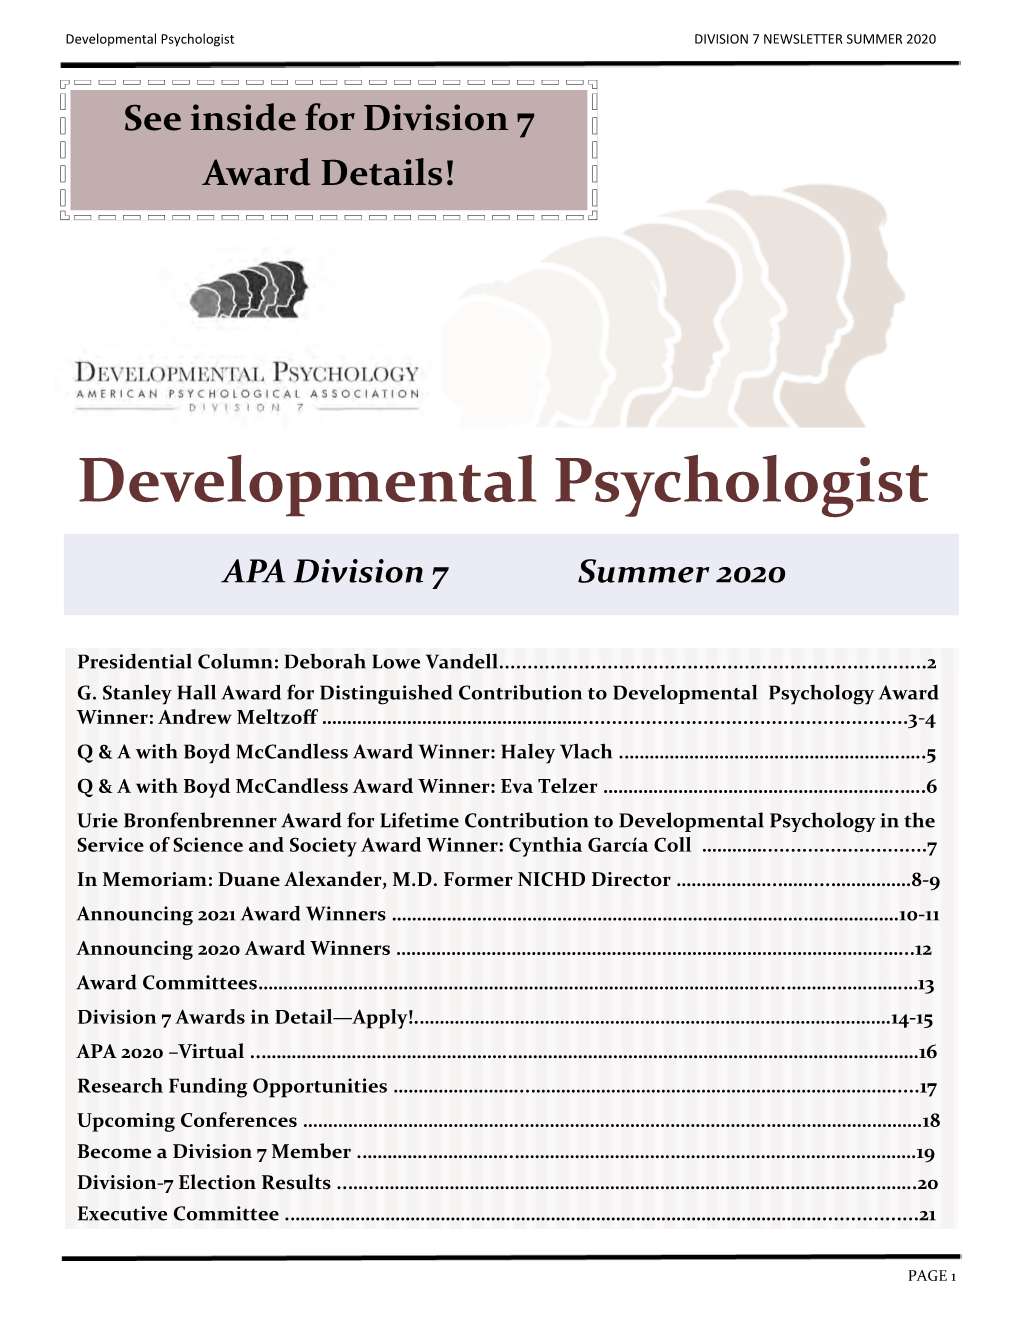 Developmental Psychology Award Winner: Andrew Meltzoff ……………………………………………